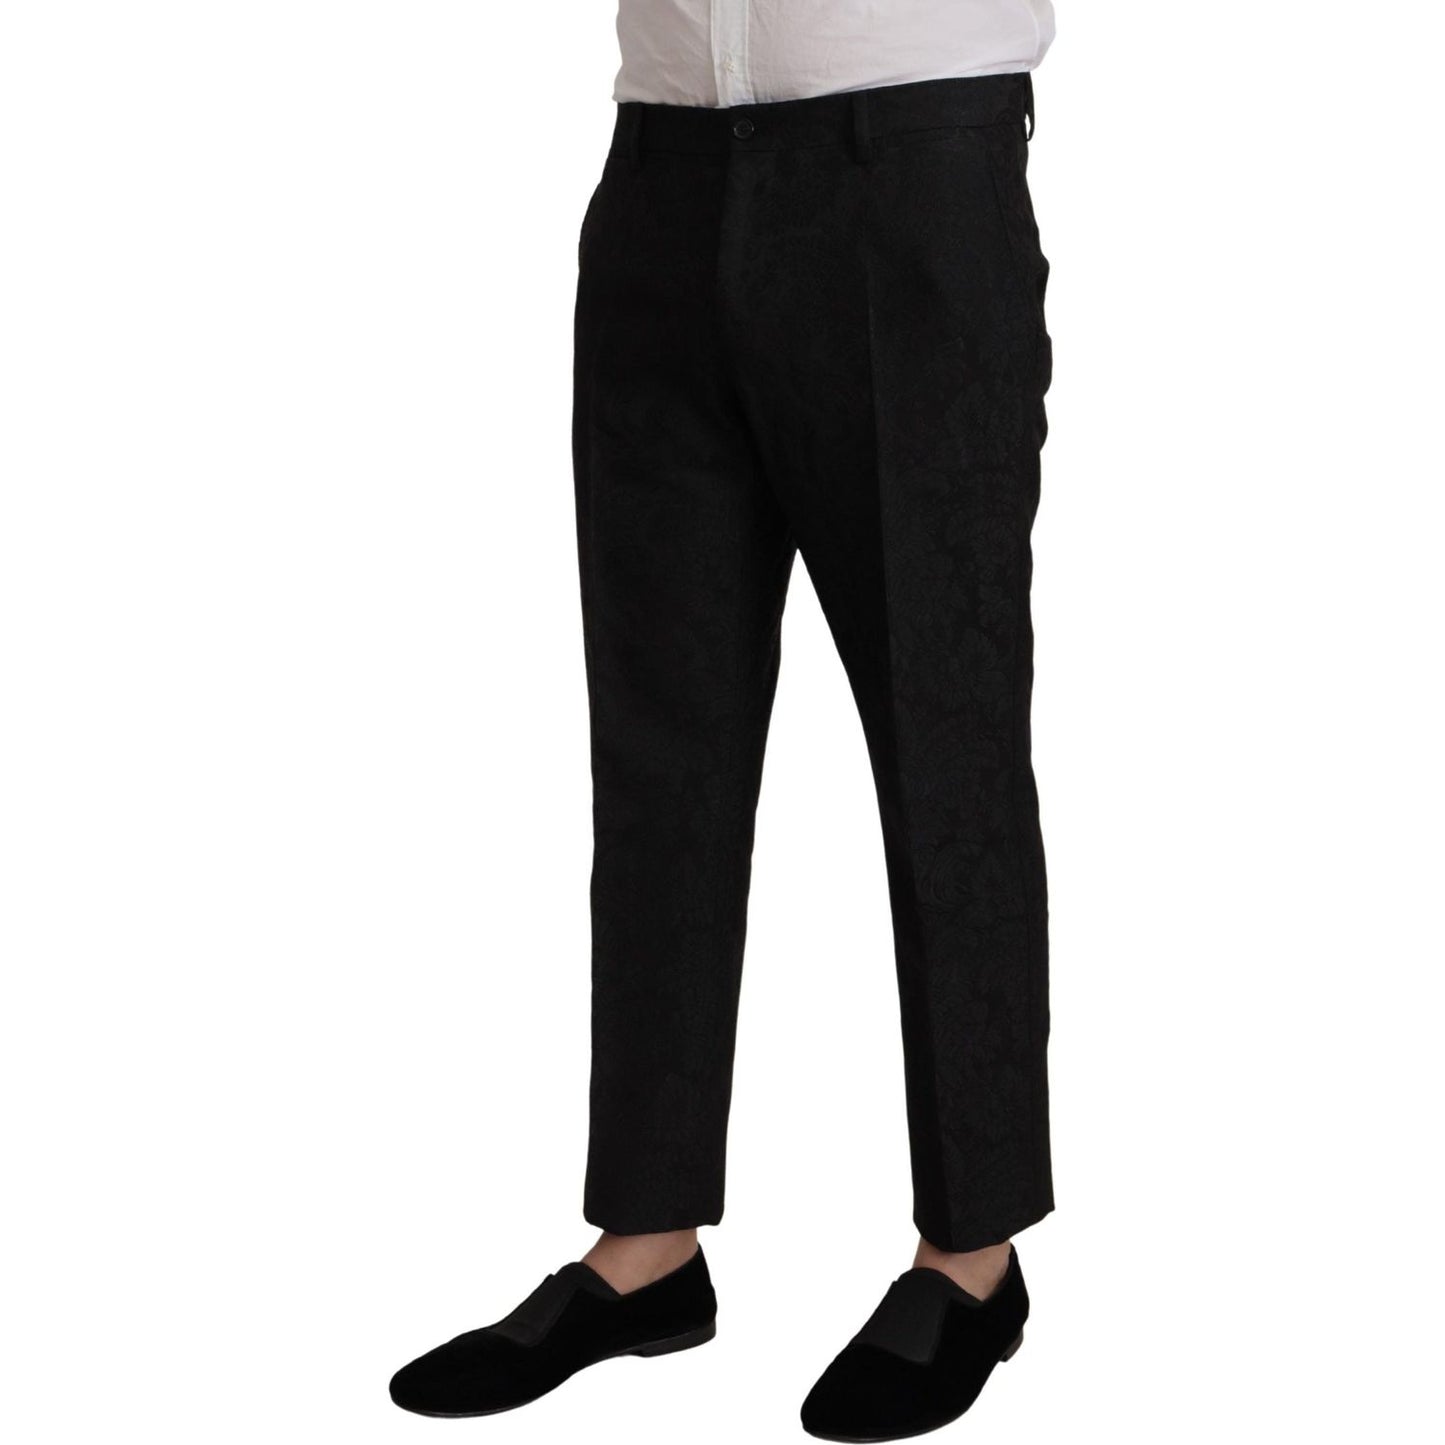 Dolce & Gabbana Elegant Black Two-Piece Martini Suit black-polyester-formal-2-piece-martini-suit